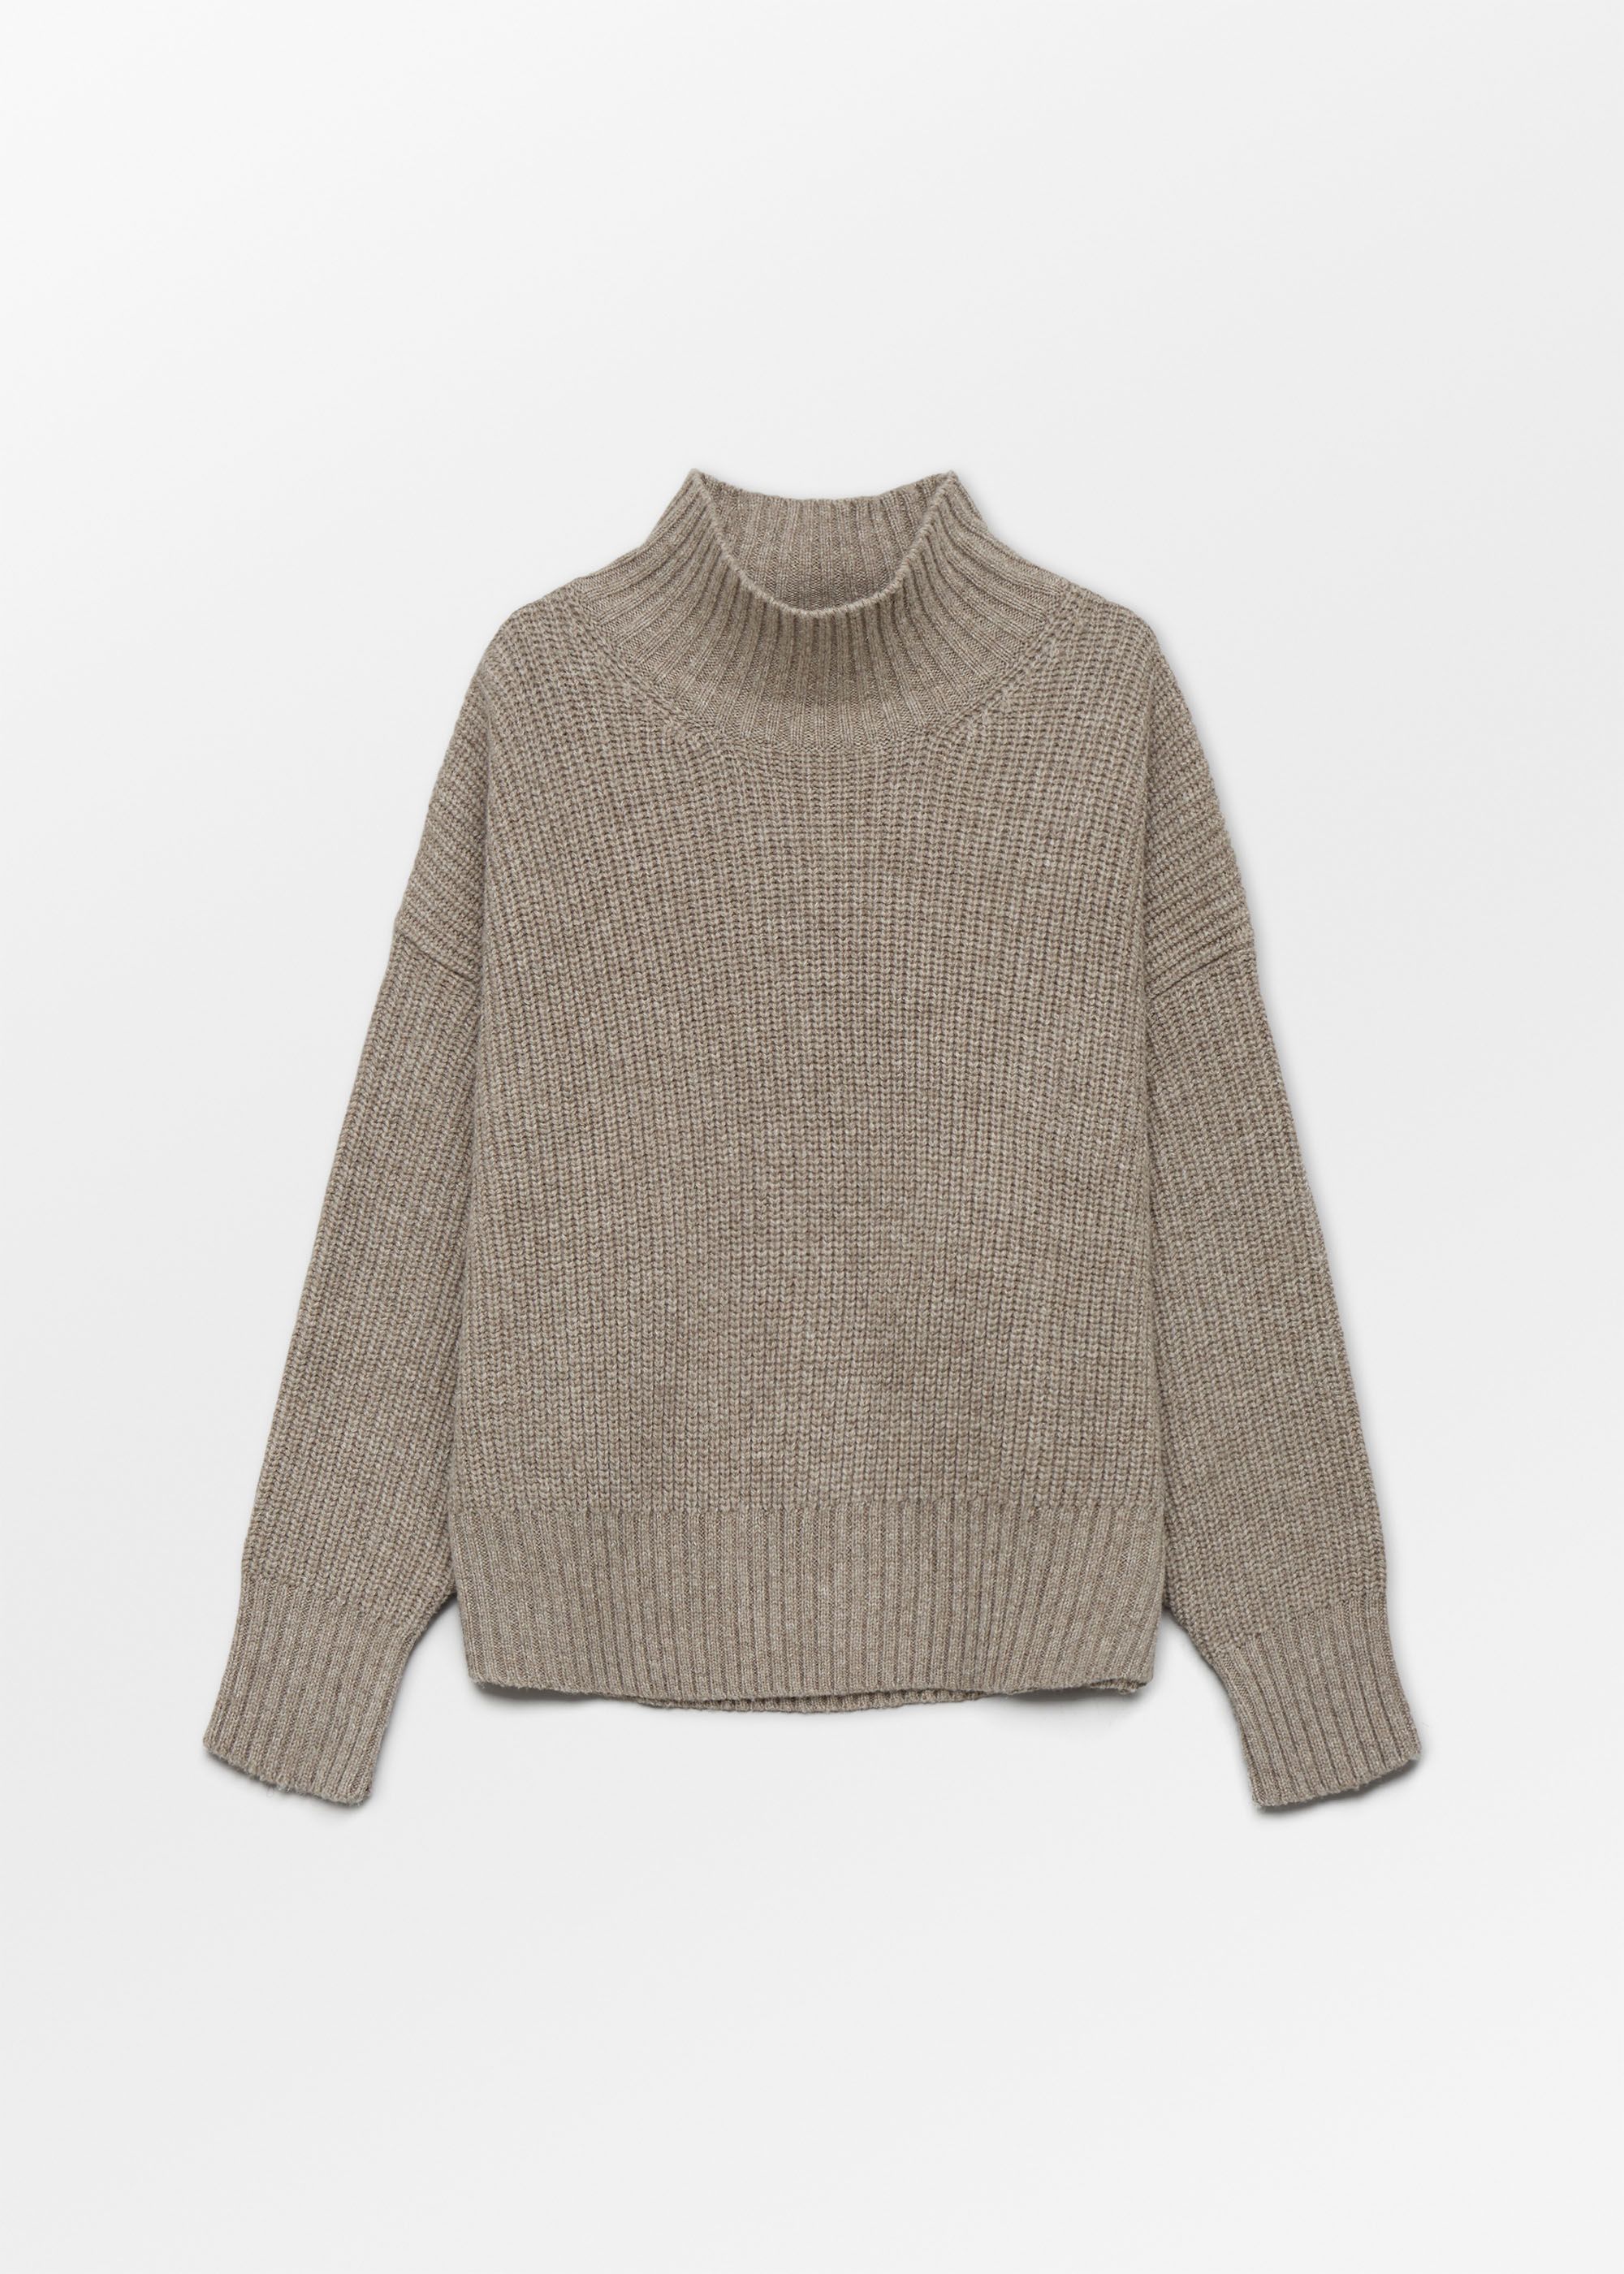 Strickwaren - Hera sweater